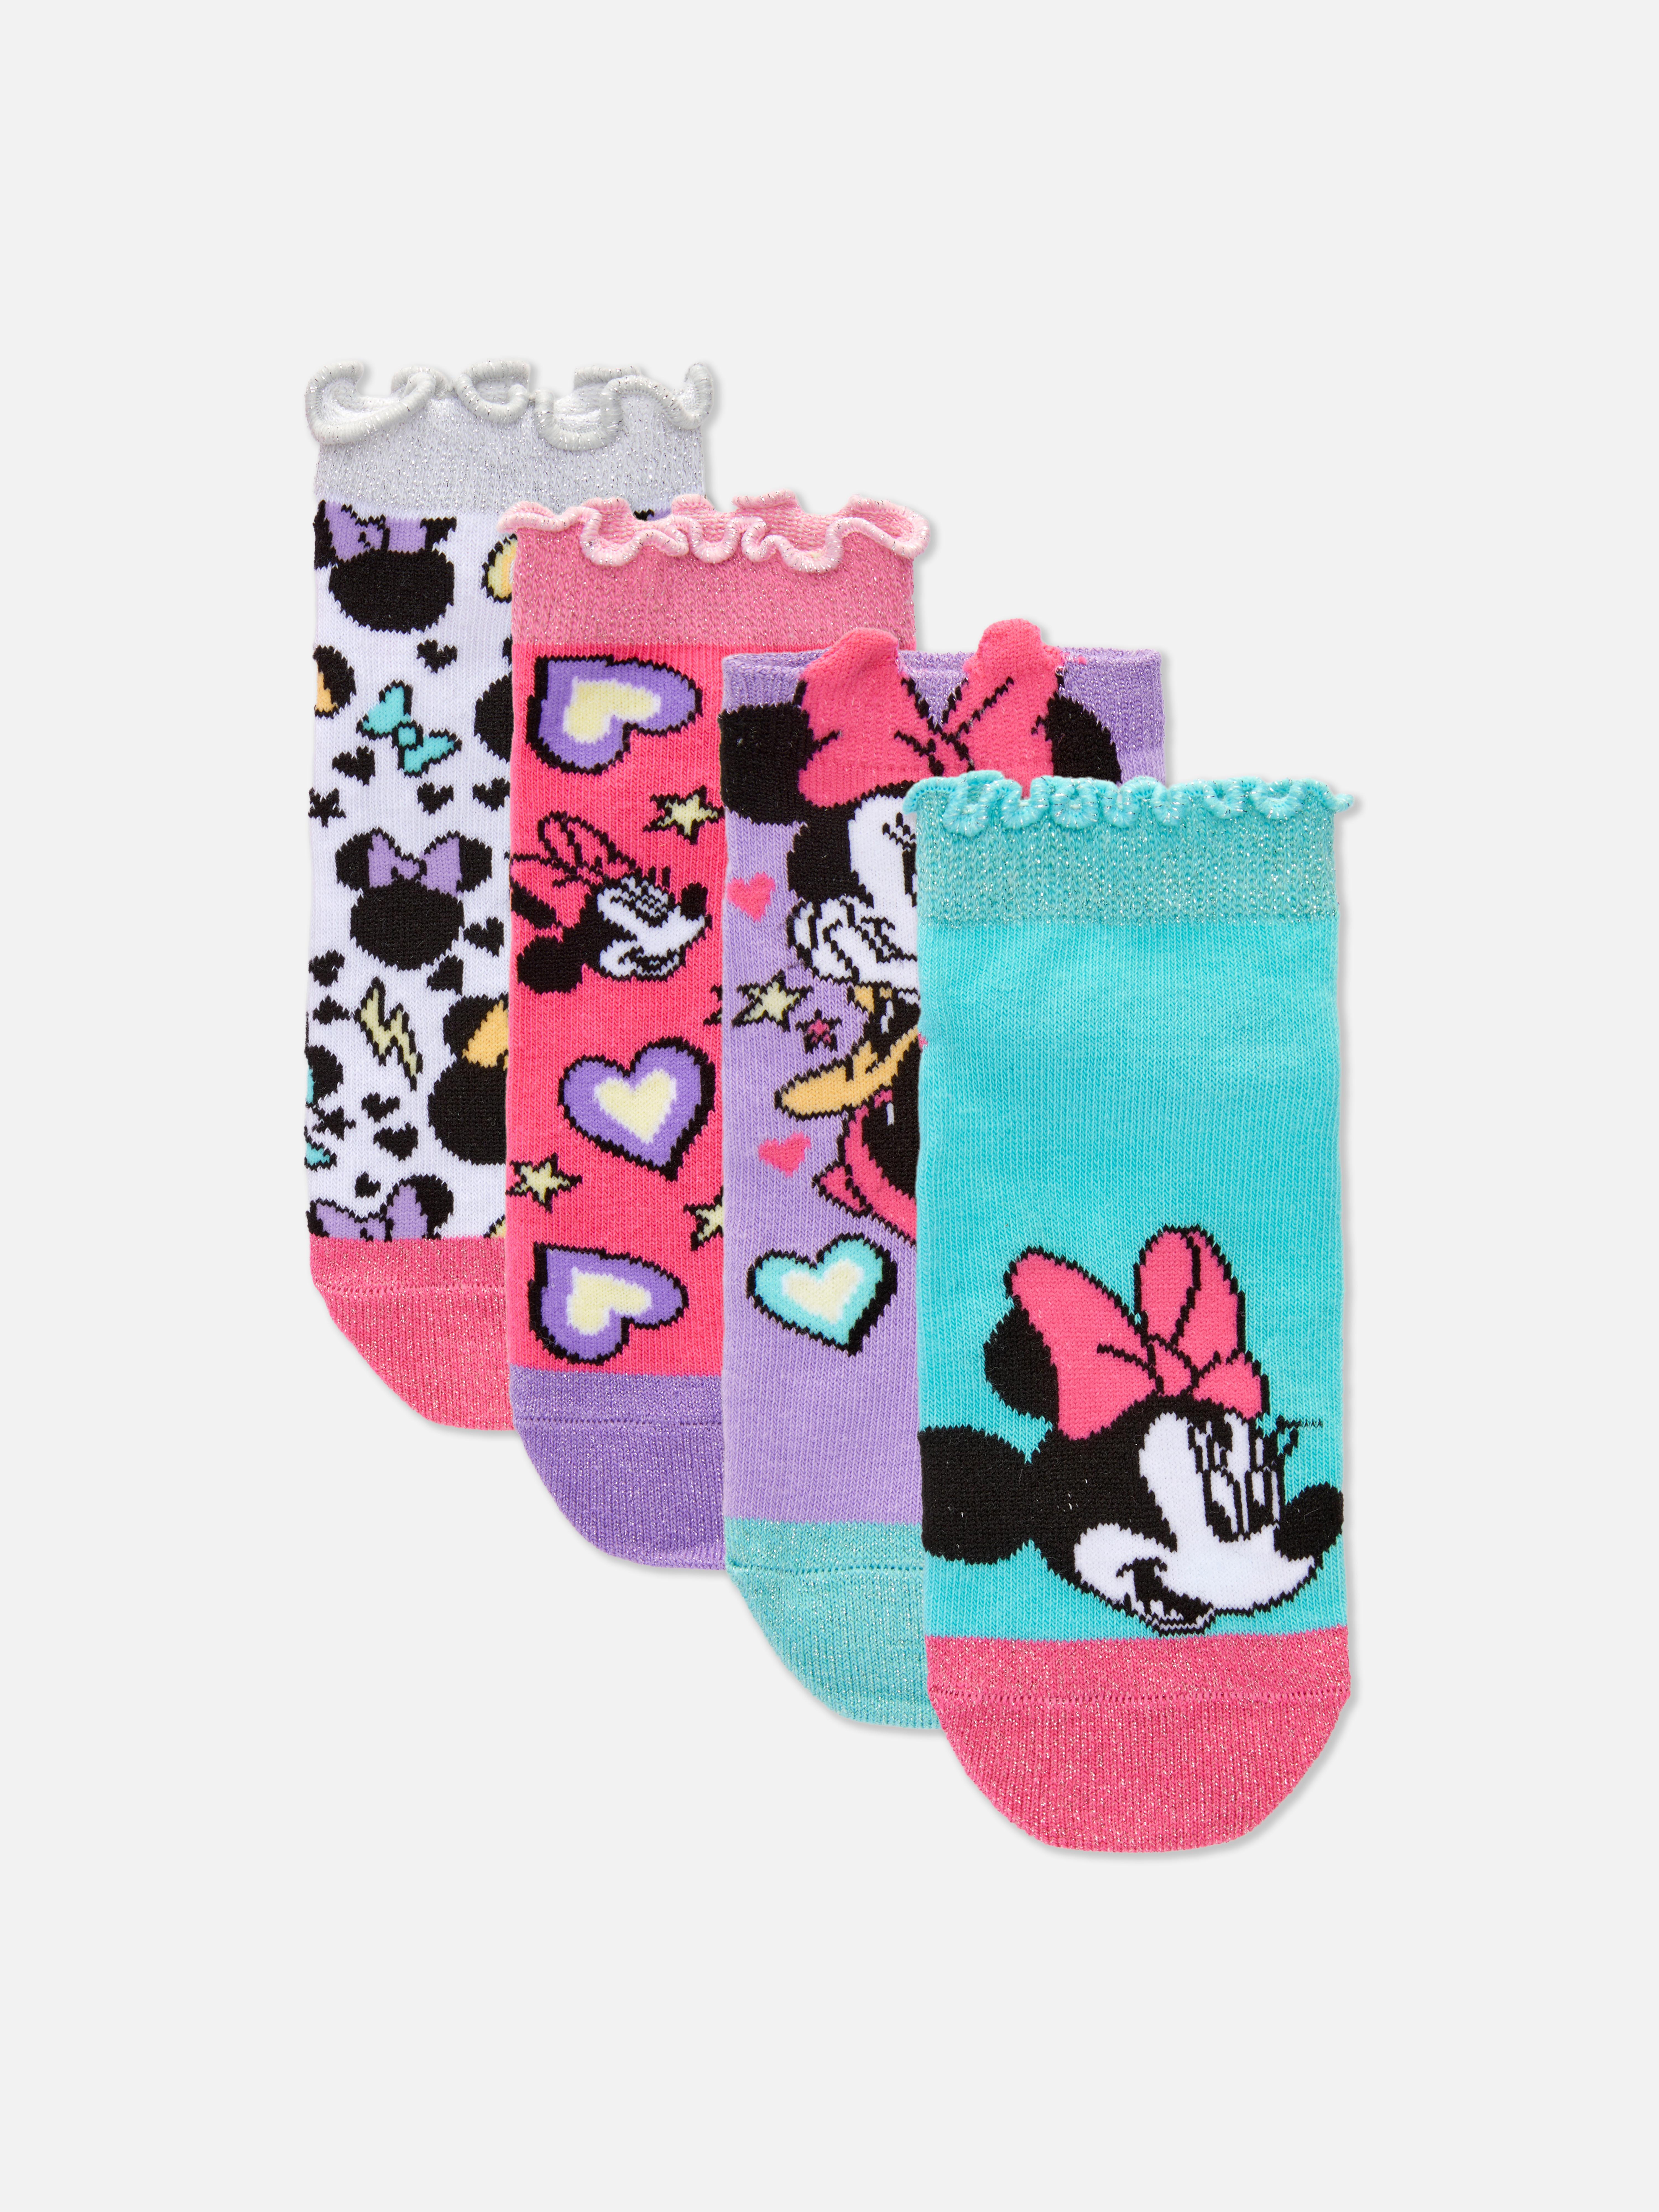 4 páry ponožek do tenisek Minnie Mouse